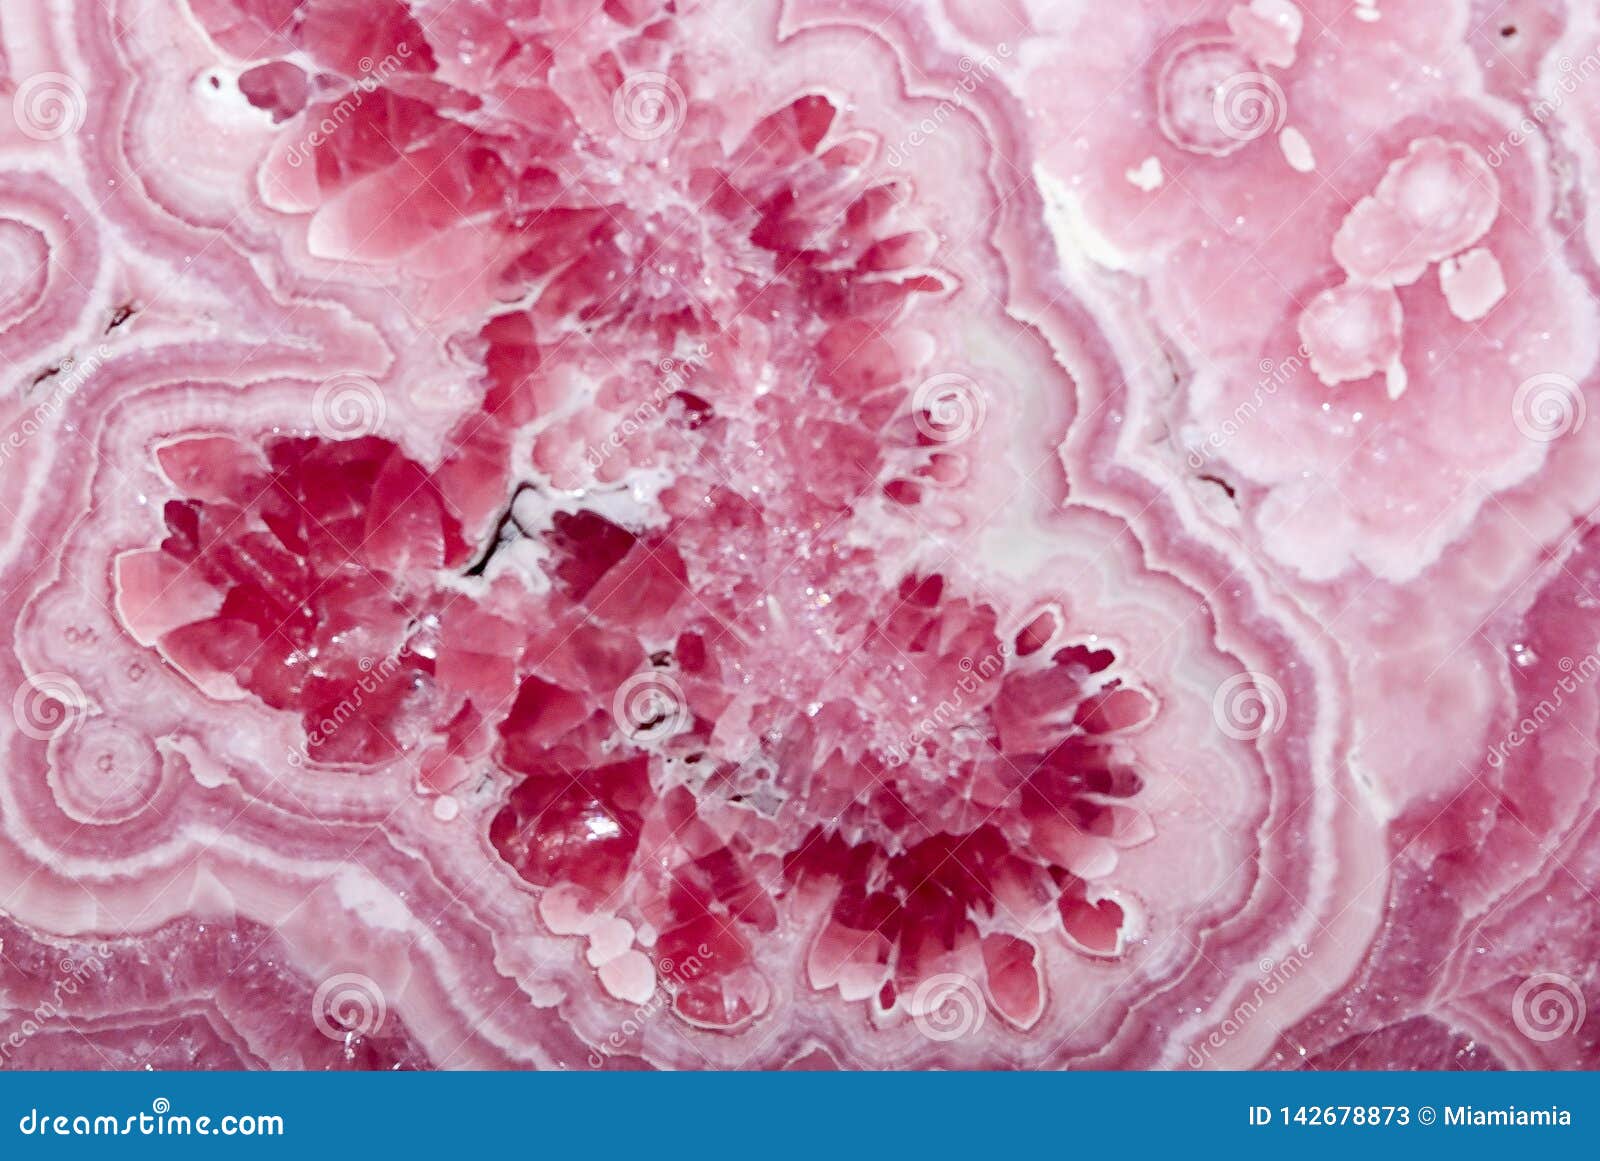 rhodochrosite rose-colored mineral, close up.